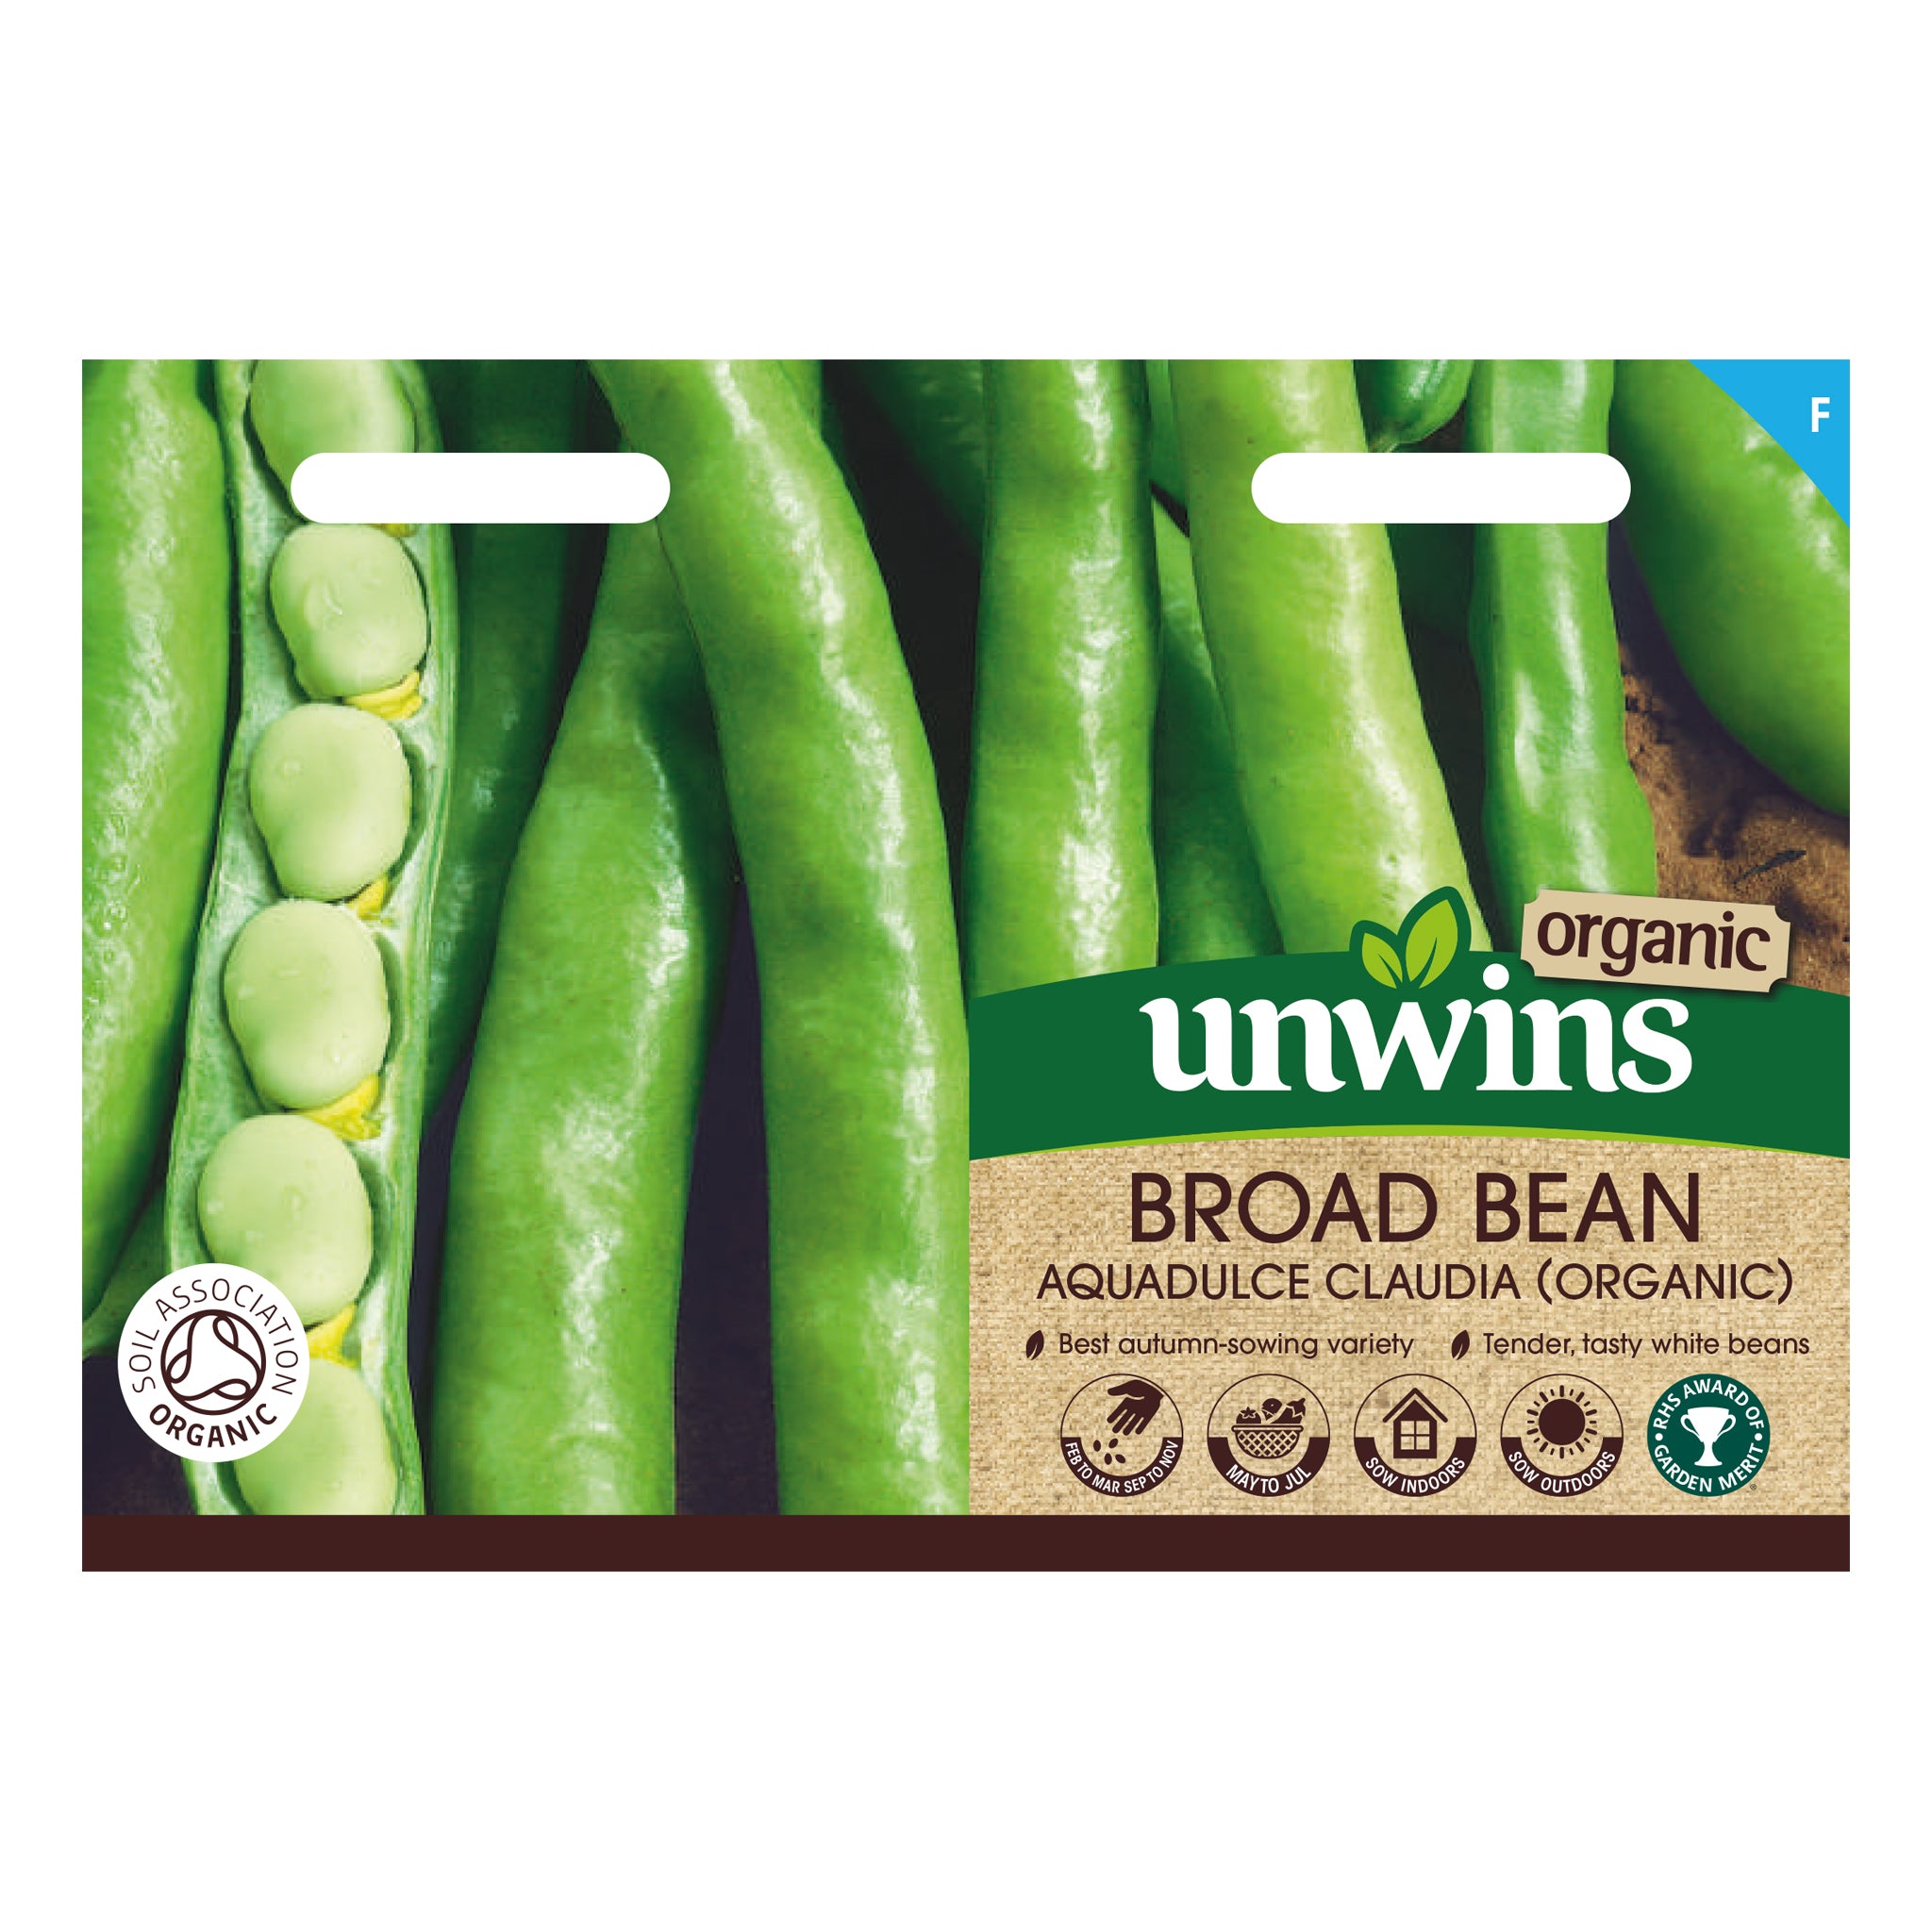 Unwins Organic Broad Bean Aquadulce Claudia Seeds